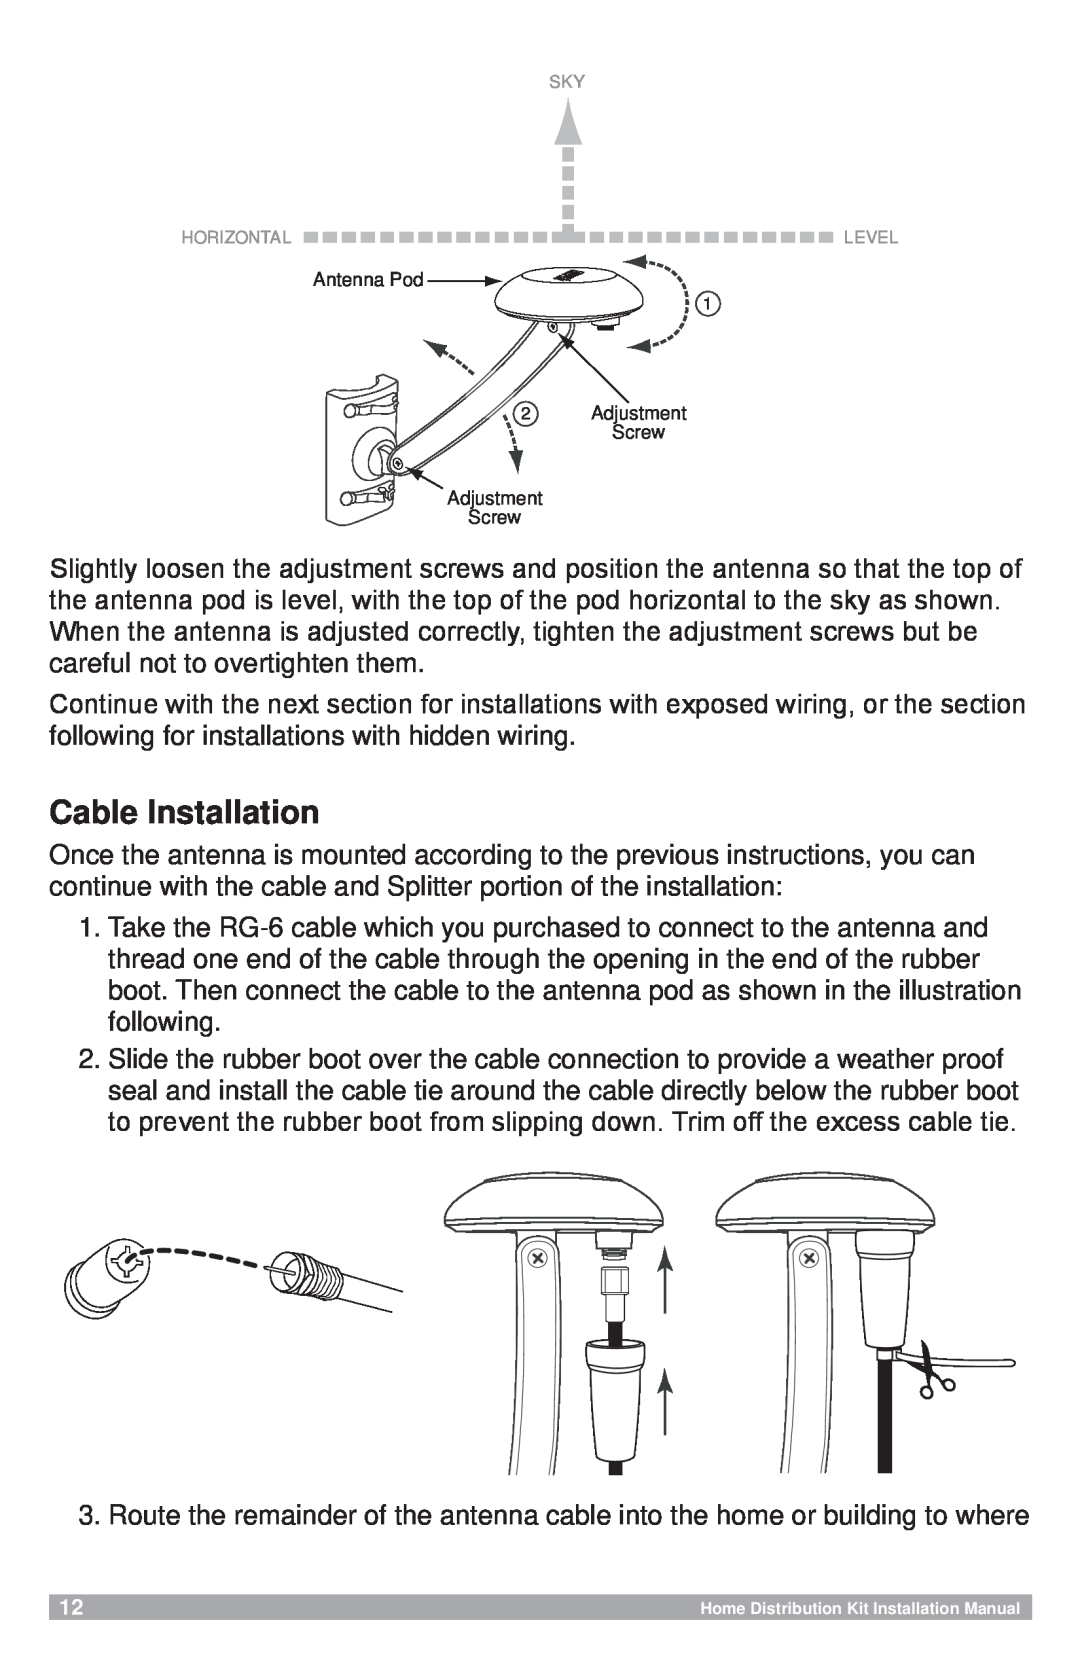 Sirius Satellite Radio SRS-2VB installation manual Cable Installation, Antenna Pod, Adjustment Screw 